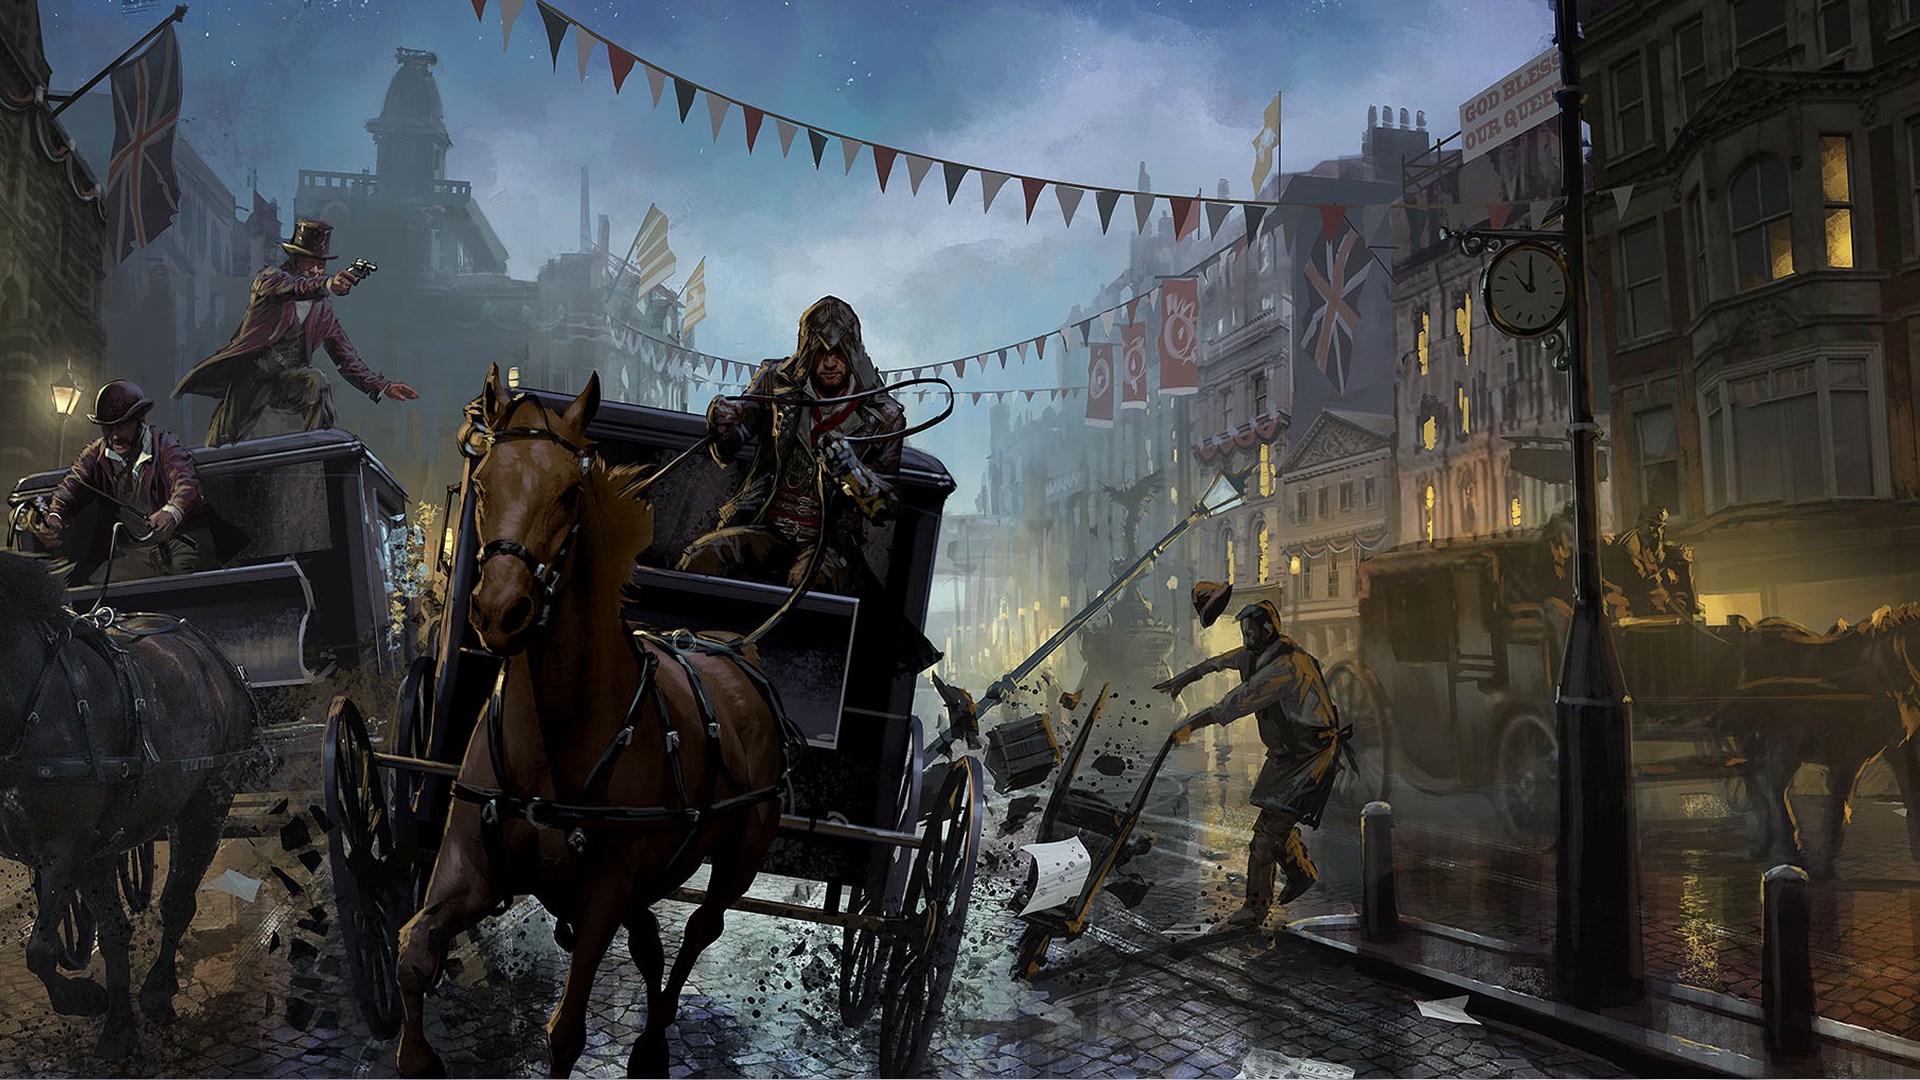 Assassin's Creed Syndicate - A Long Night DLC EU XBOX One CD Key